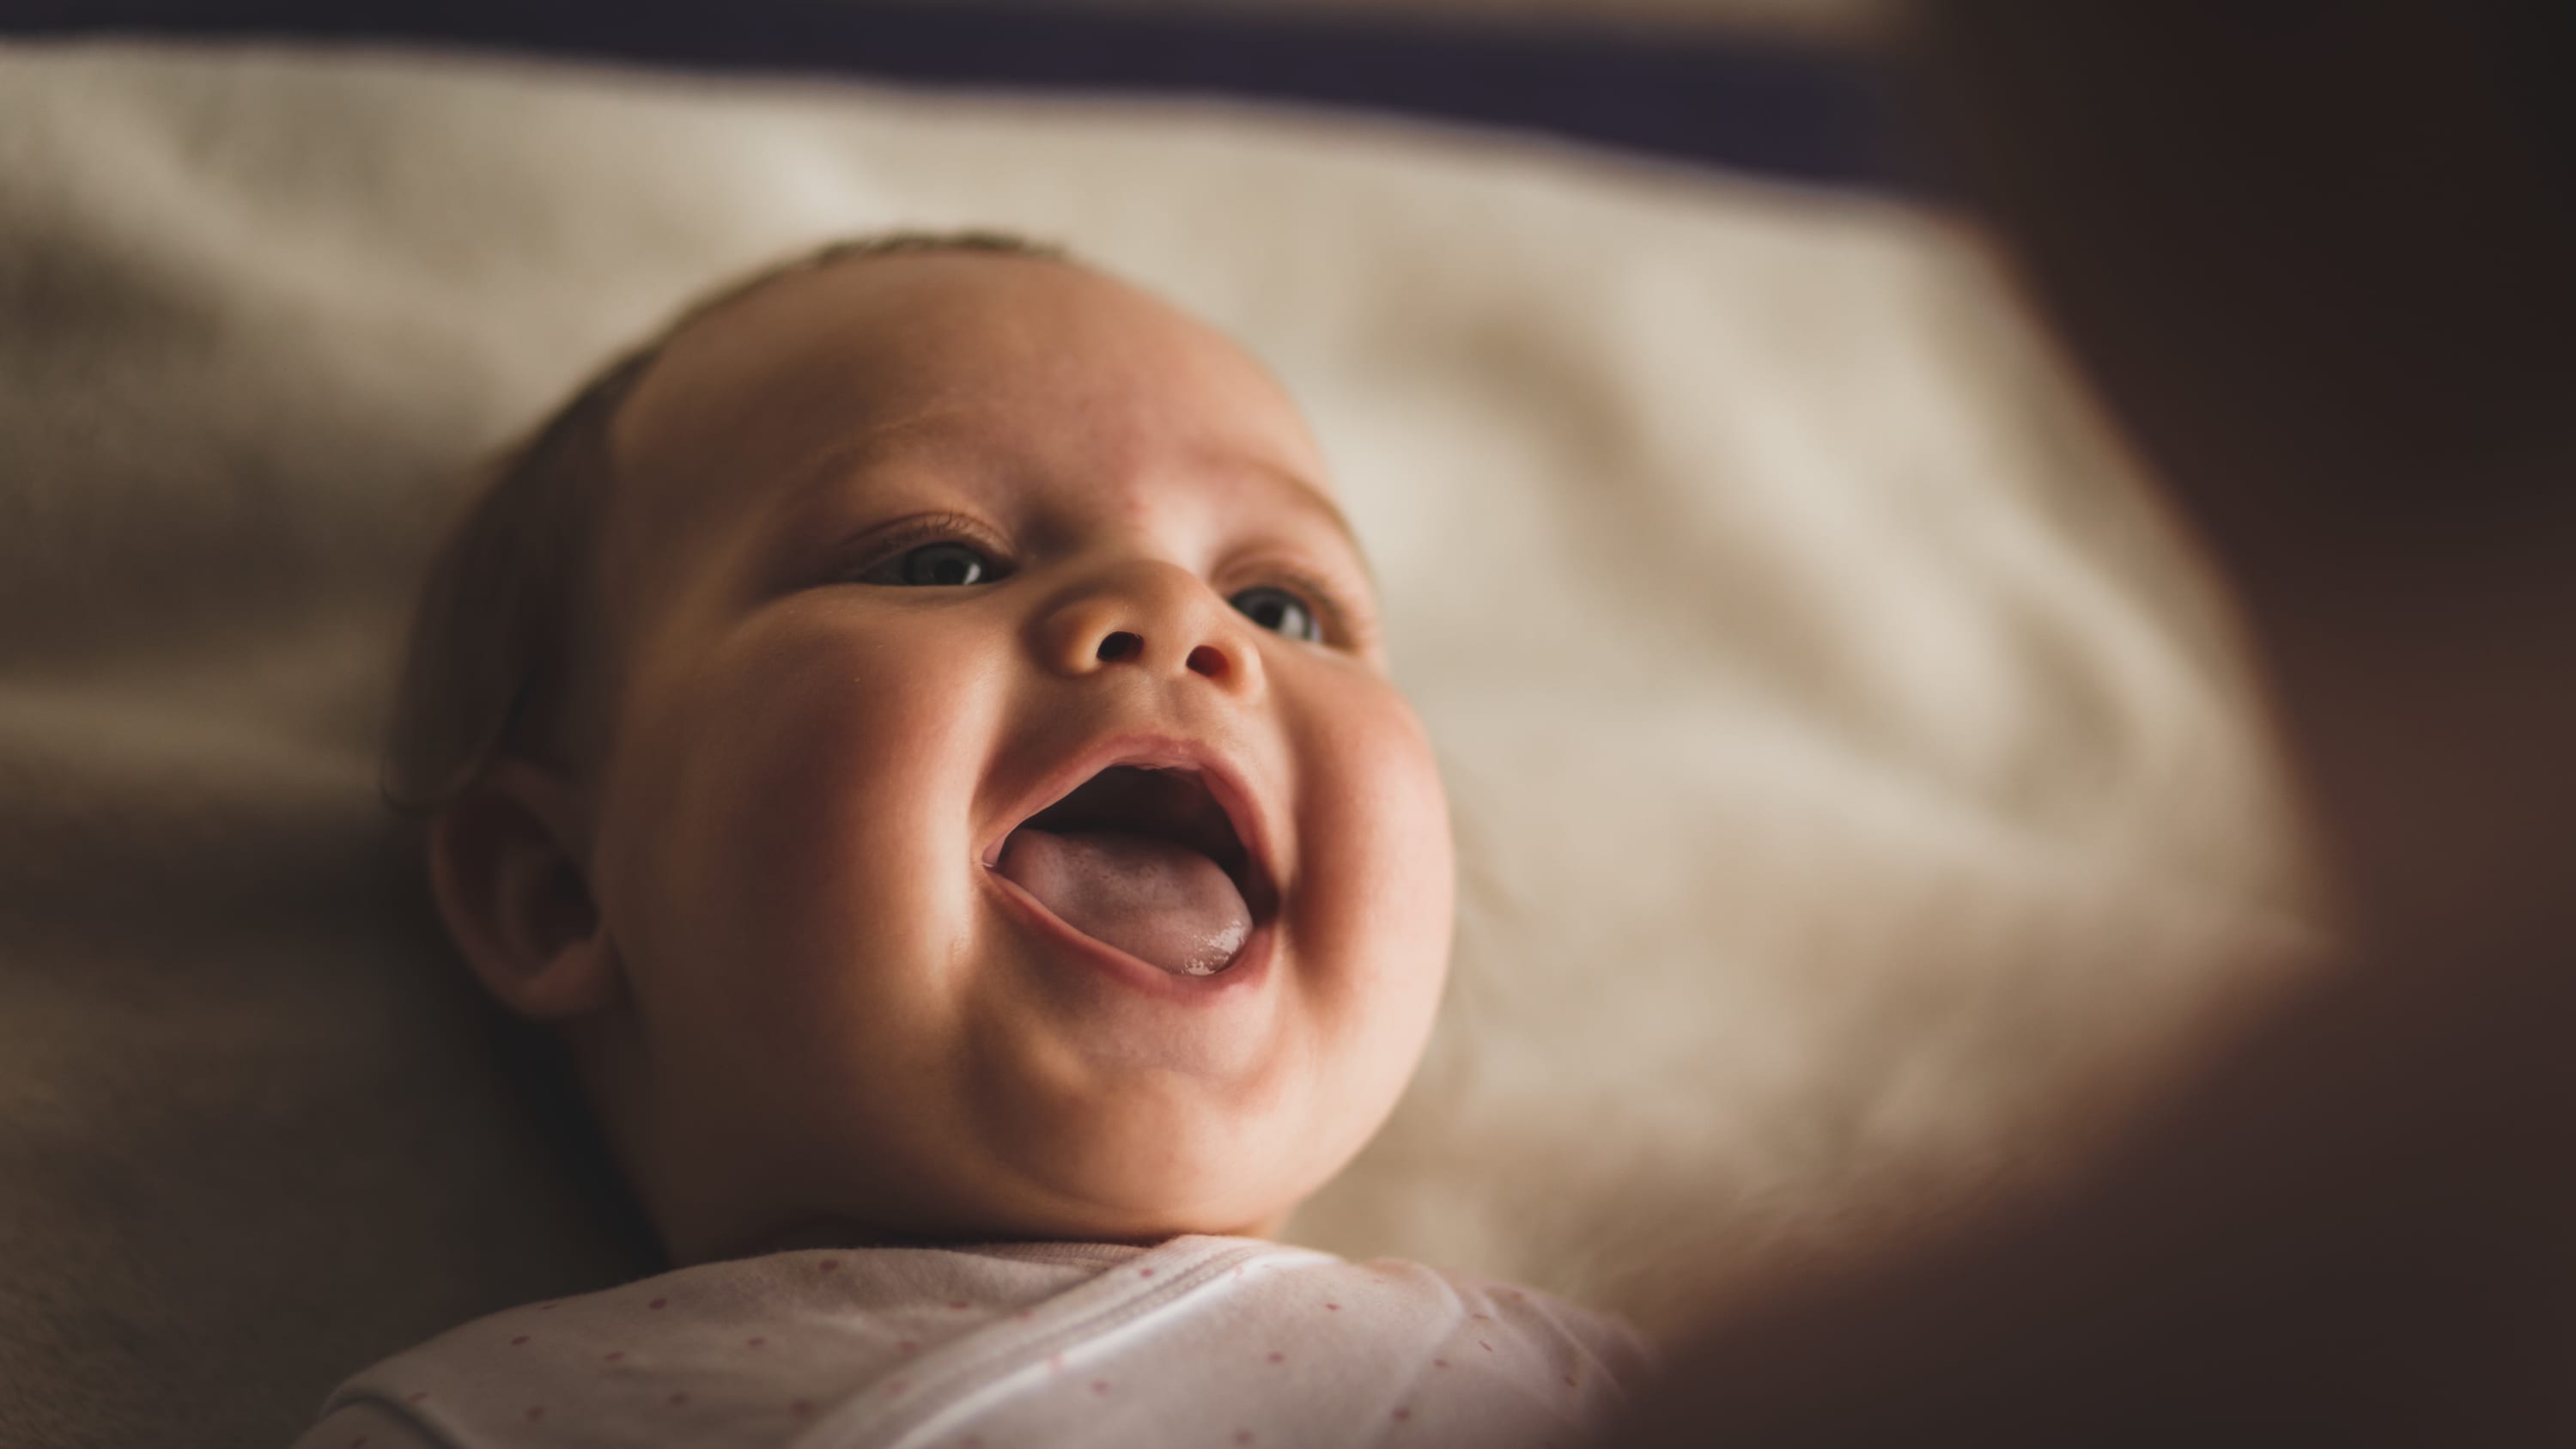 baby smiling, unaware of having patent ductus arteriosus (PDA)